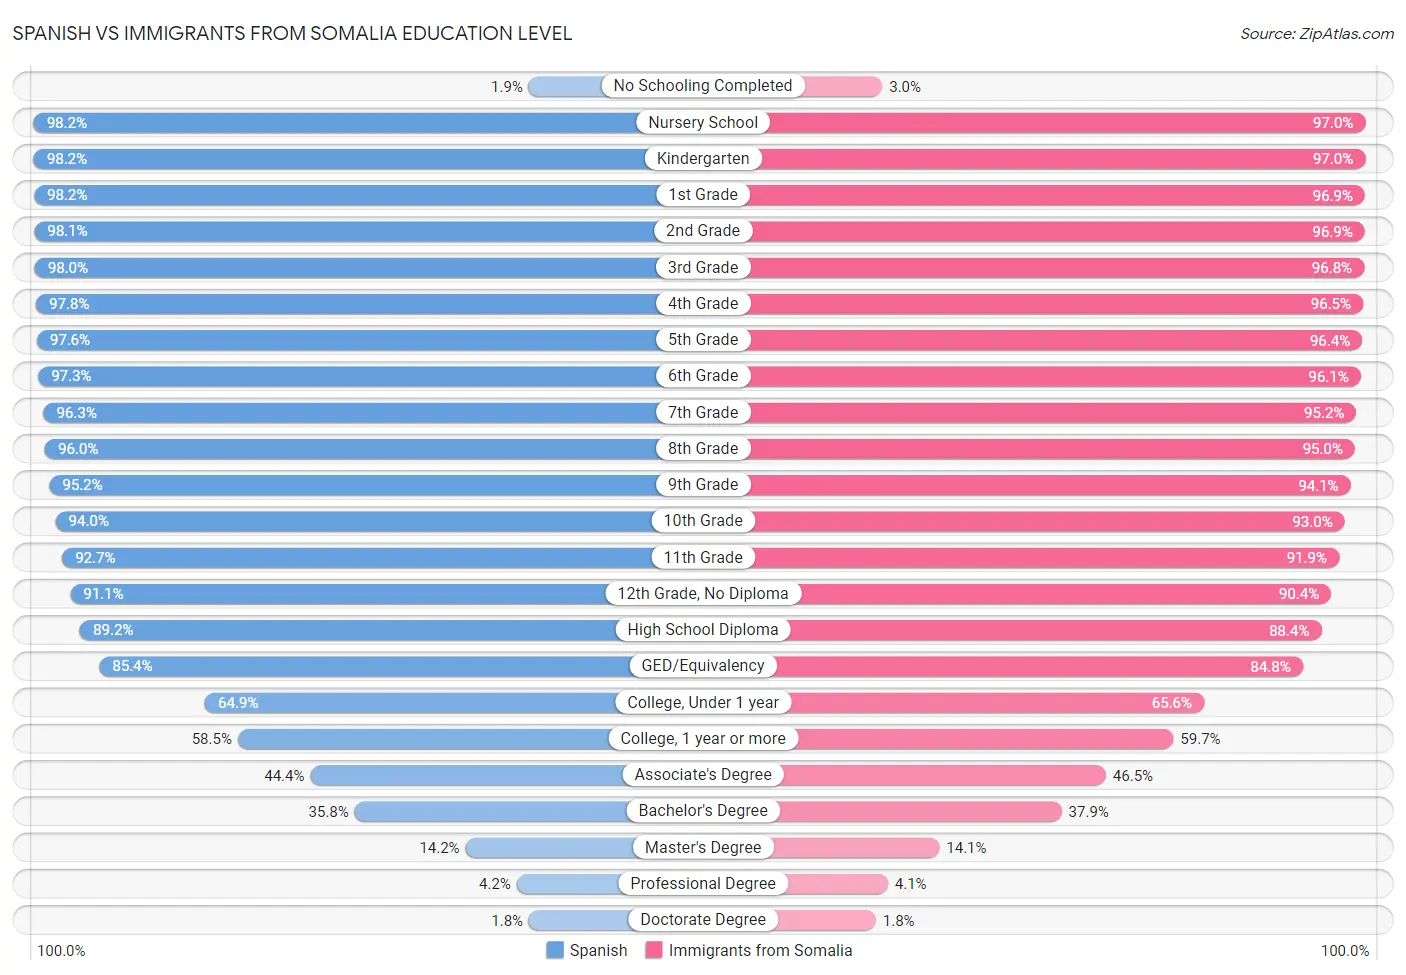 Spanish vs Immigrants from Somalia Education Level